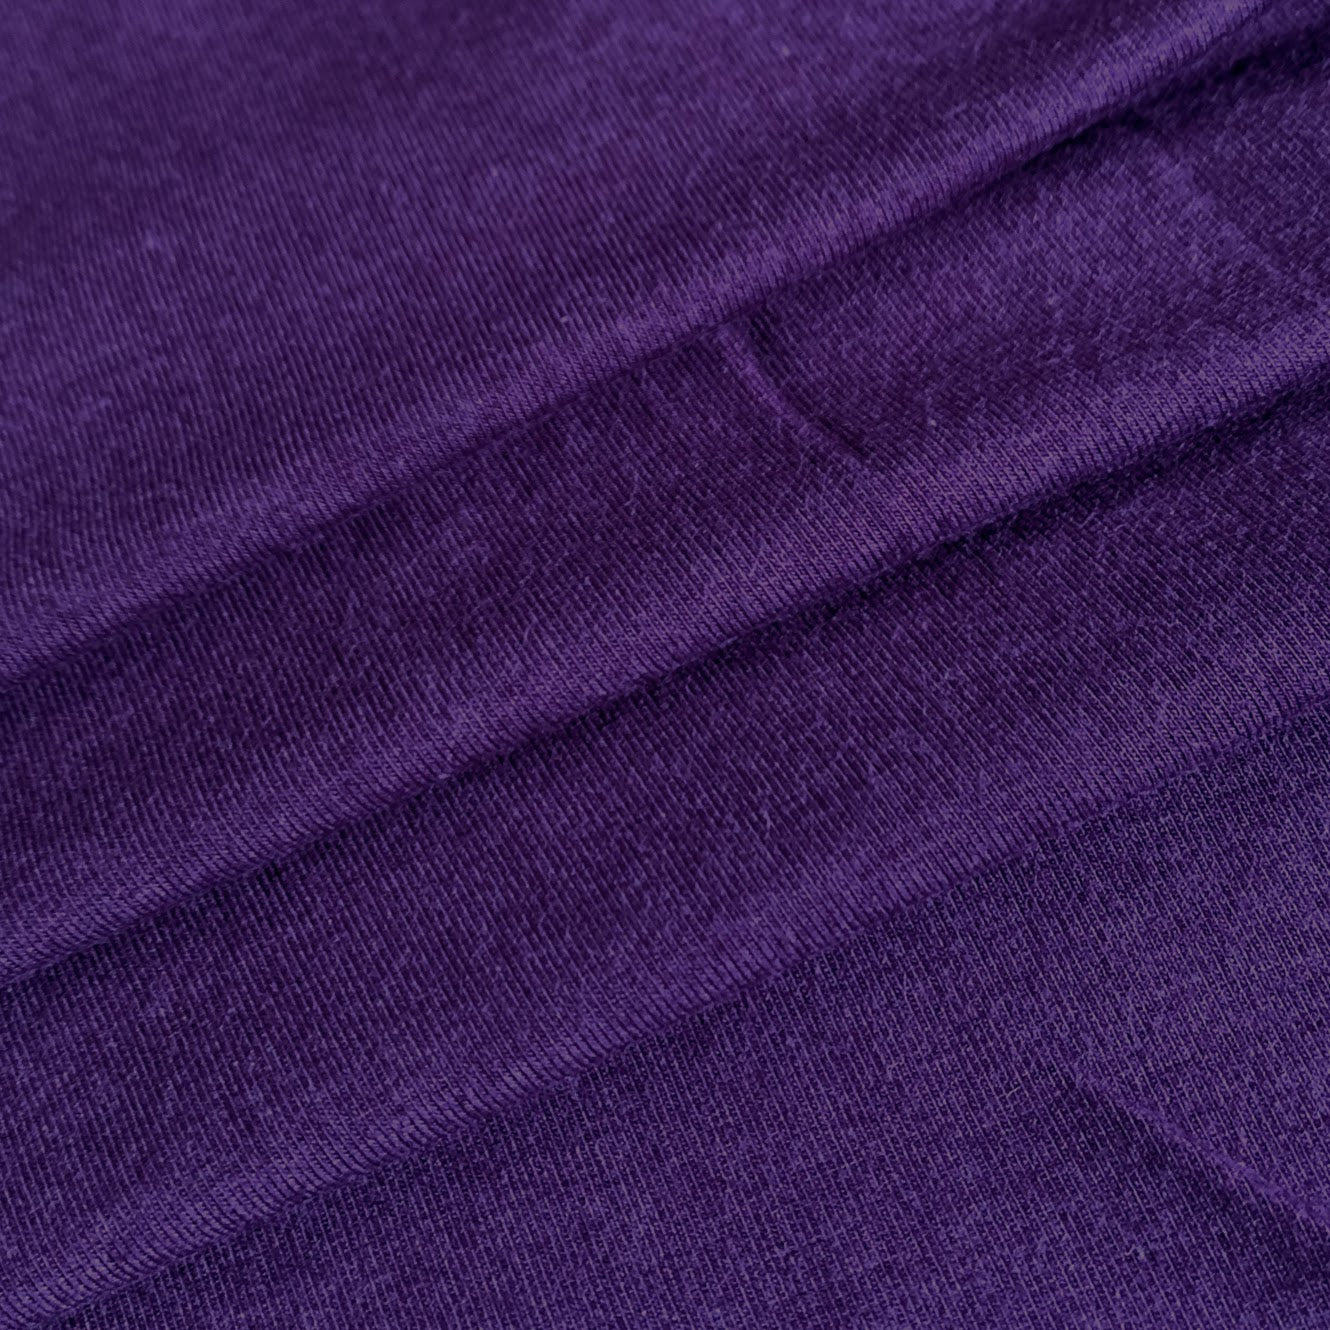 Bamboo/Cotton Stretch Jersey - Plum Purple